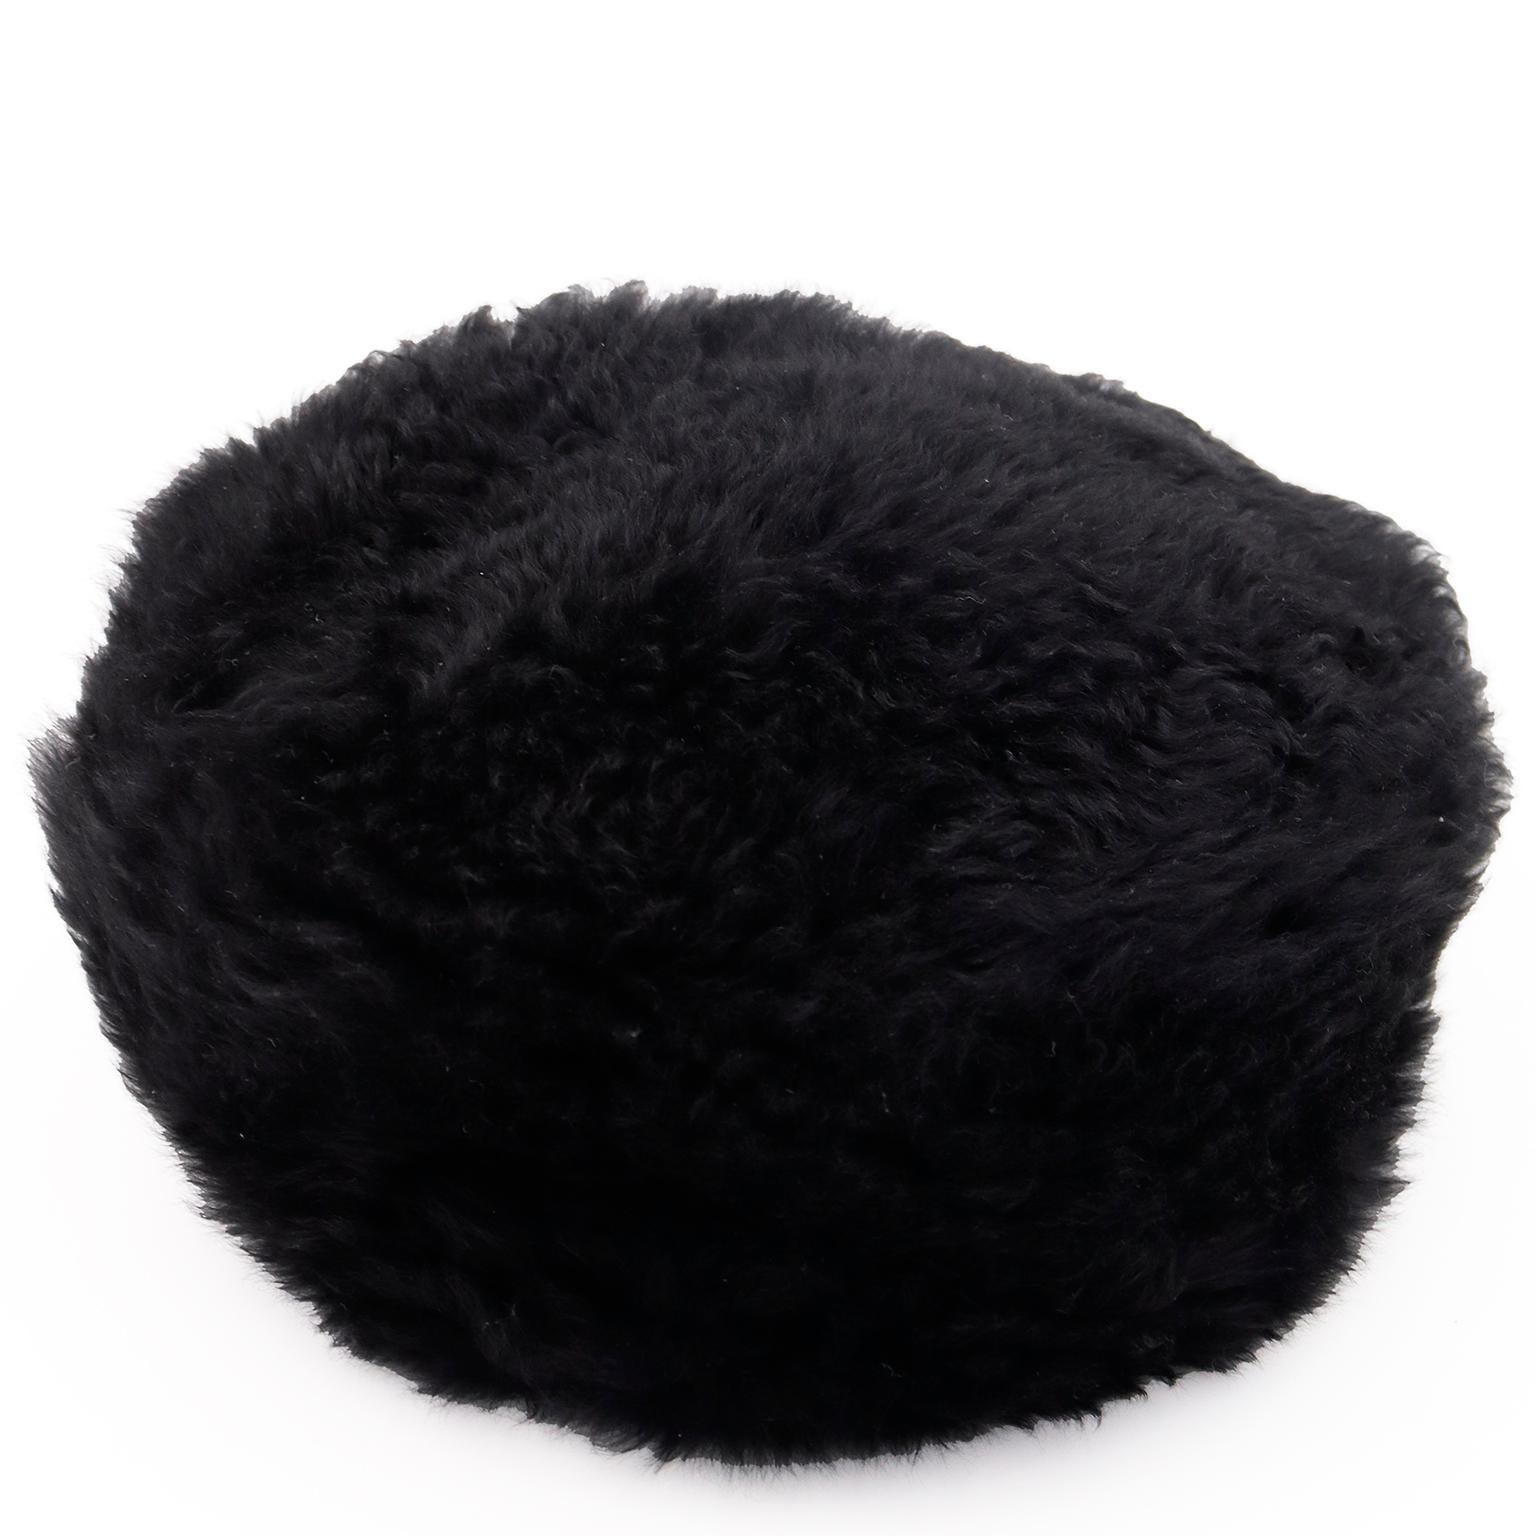 Yves Saint Laurent 1970s Russian inspired Vintage Black Fur Hat For Sale 3